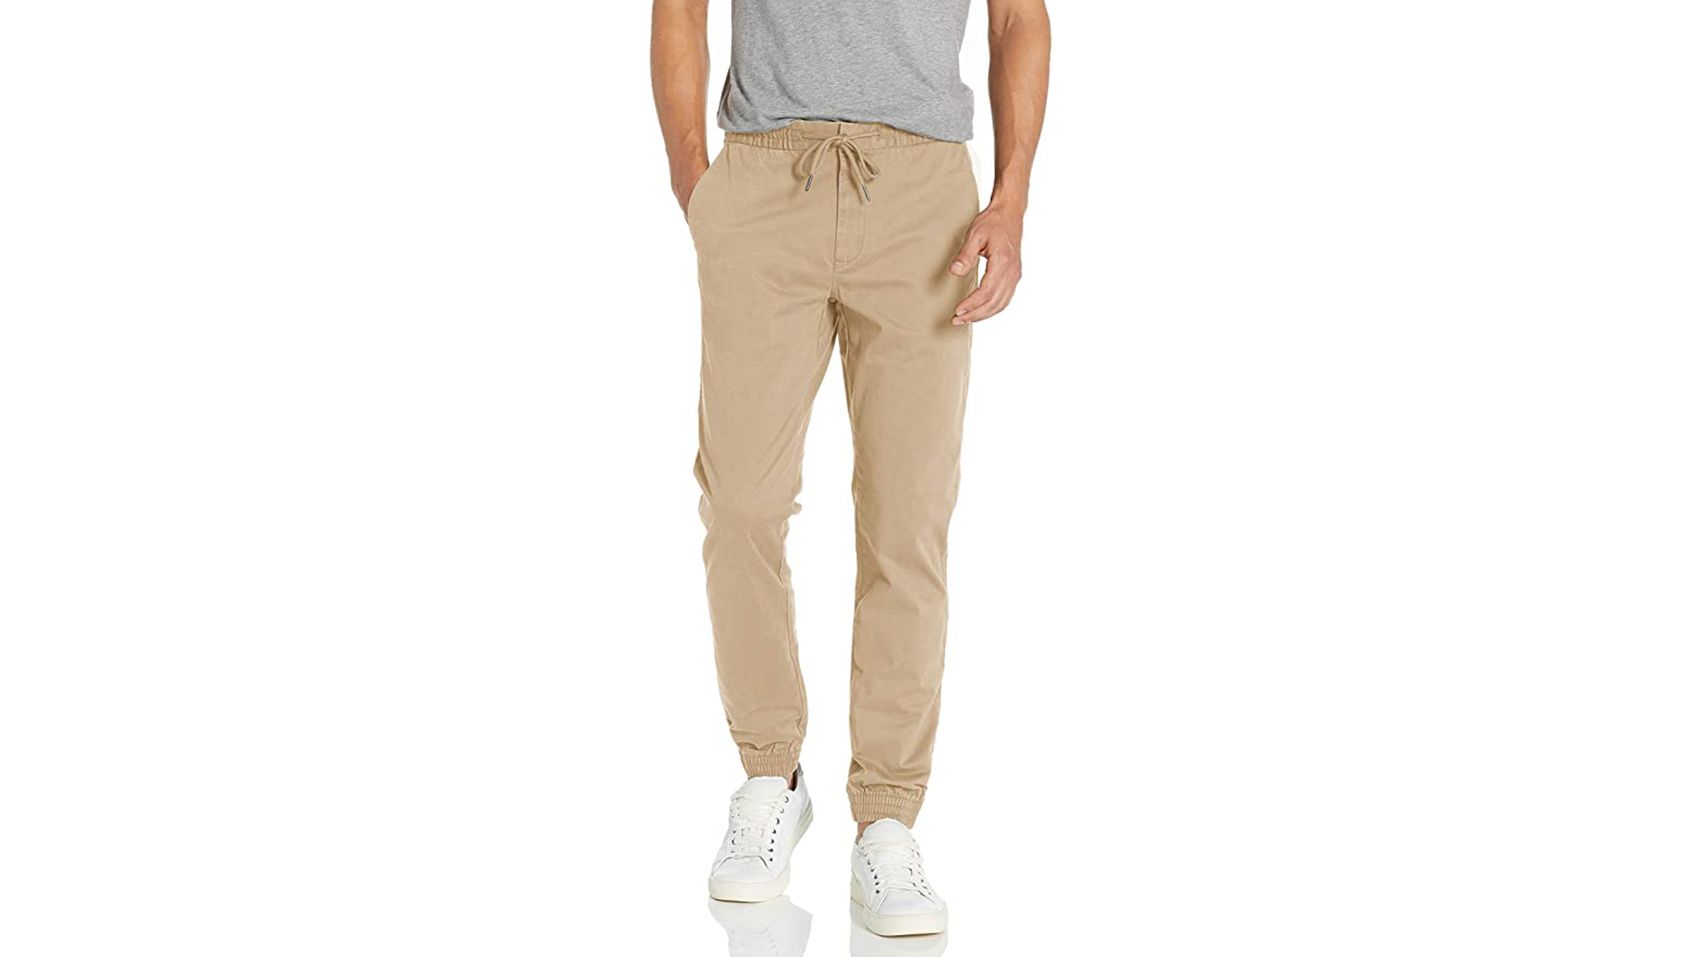 PEGENO Mens Fashion Joggers Sports Pants Cotton Cargo Pants Sweatpants Trousers Mens Long Pants（Dark Blue-US L） 